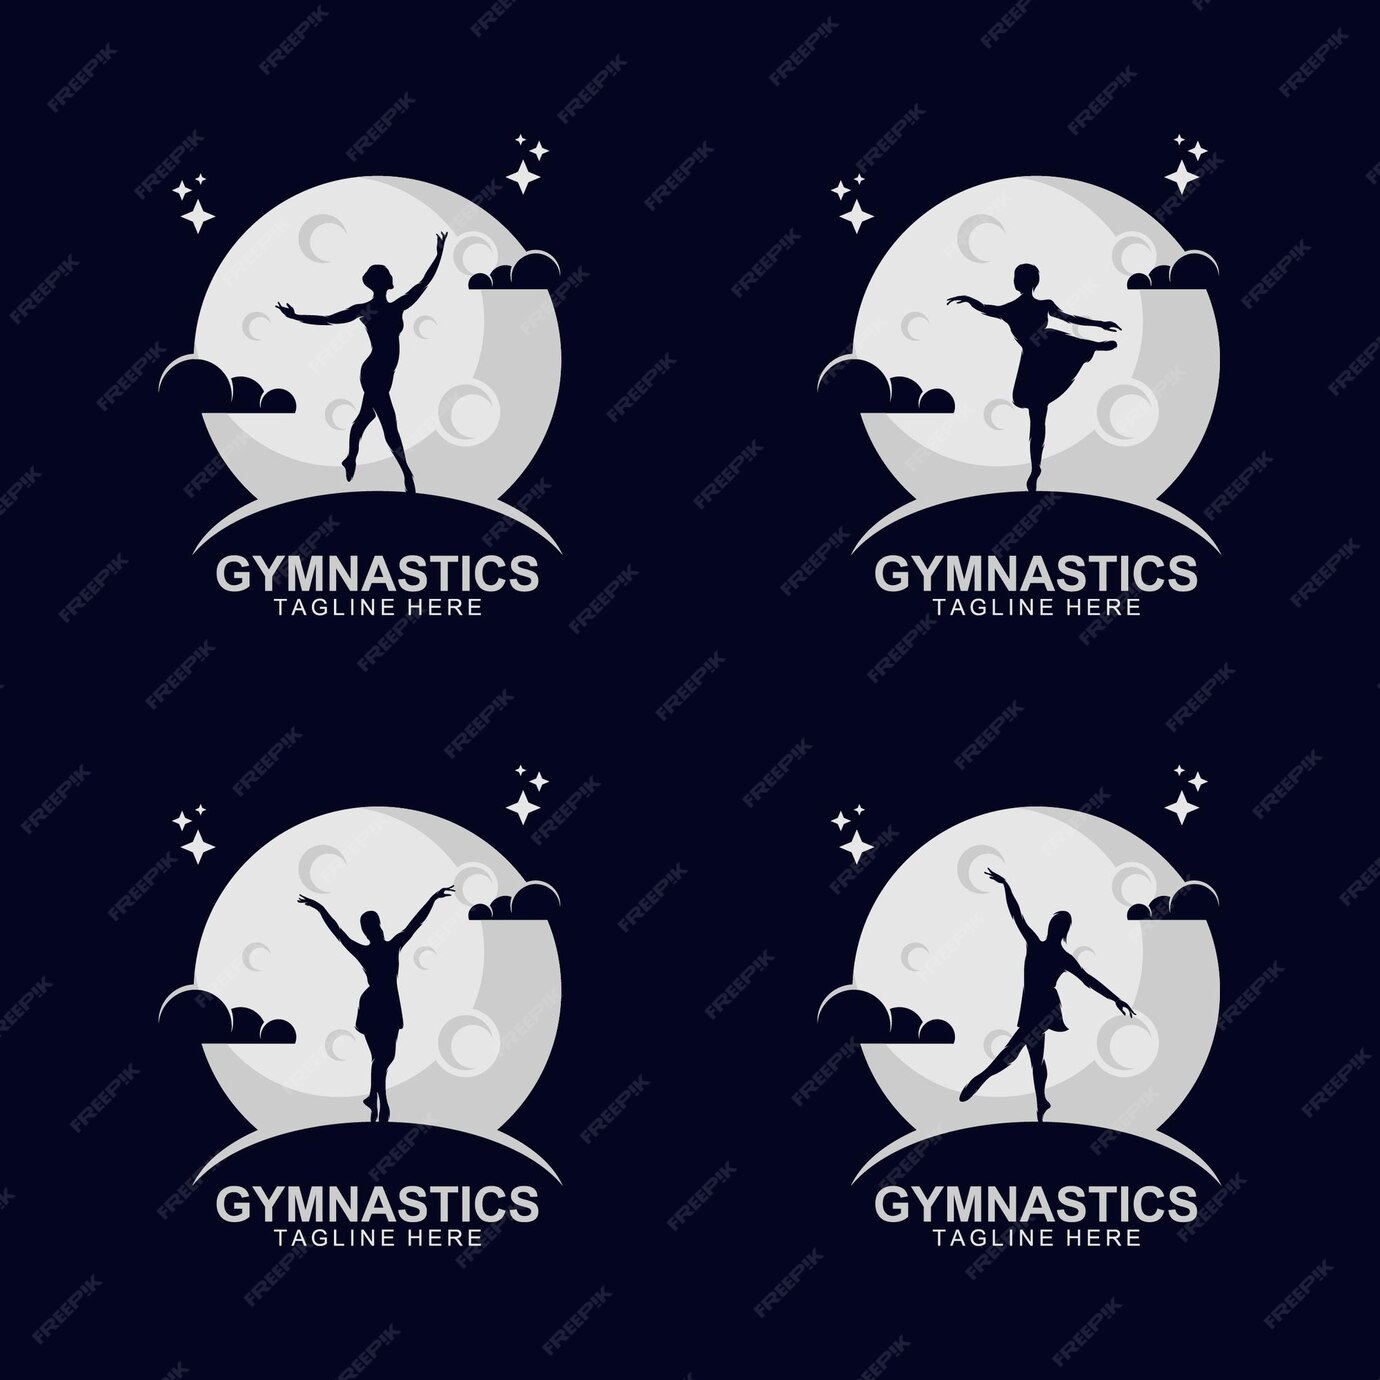 Premium Vector Silhouette gymnastics logo on the moon